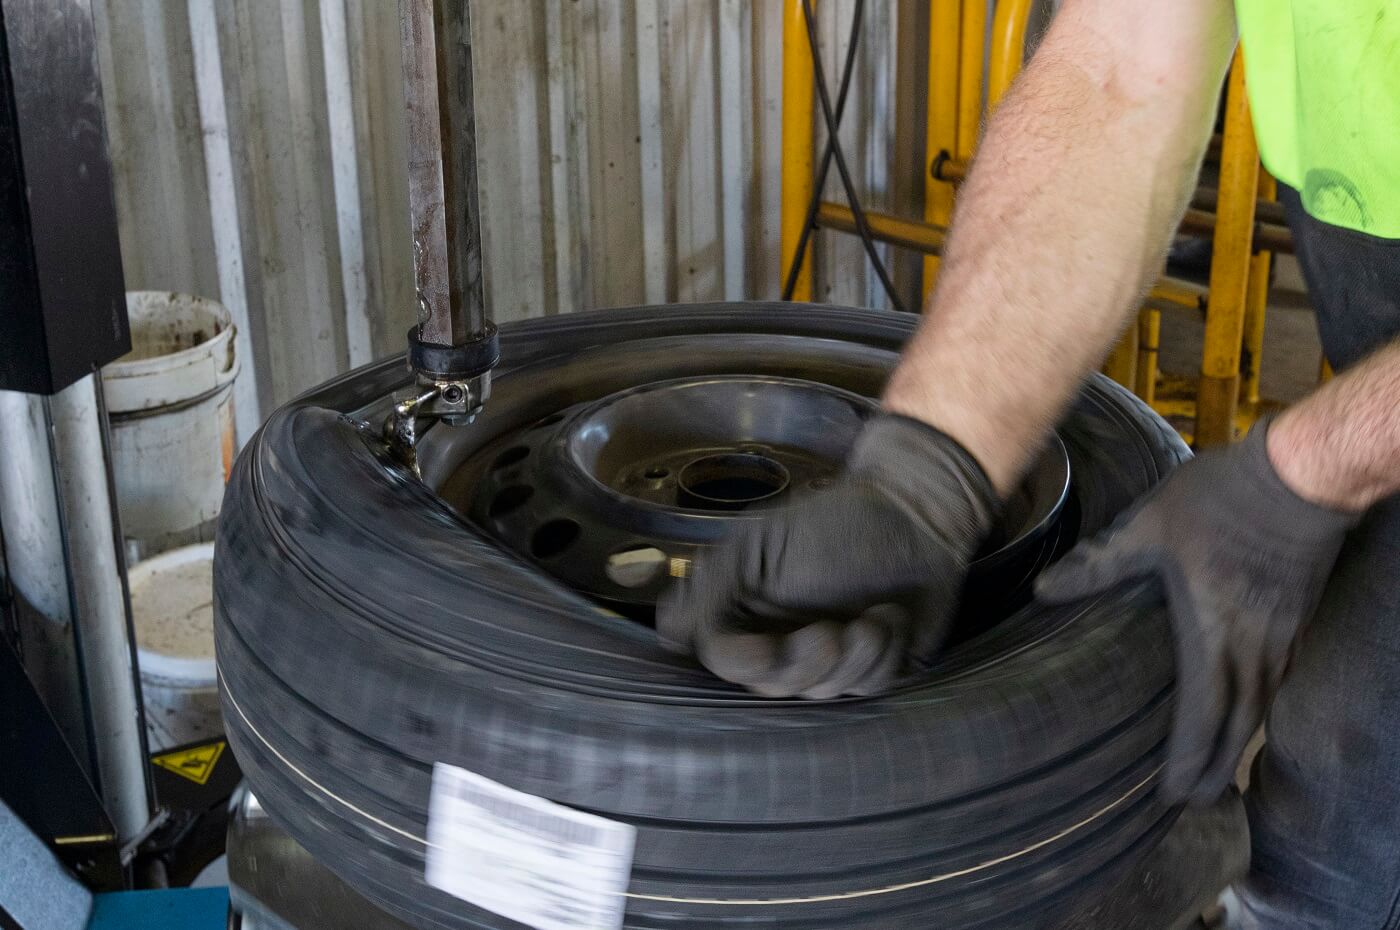 Tyre Repairs - Puncture Repairs